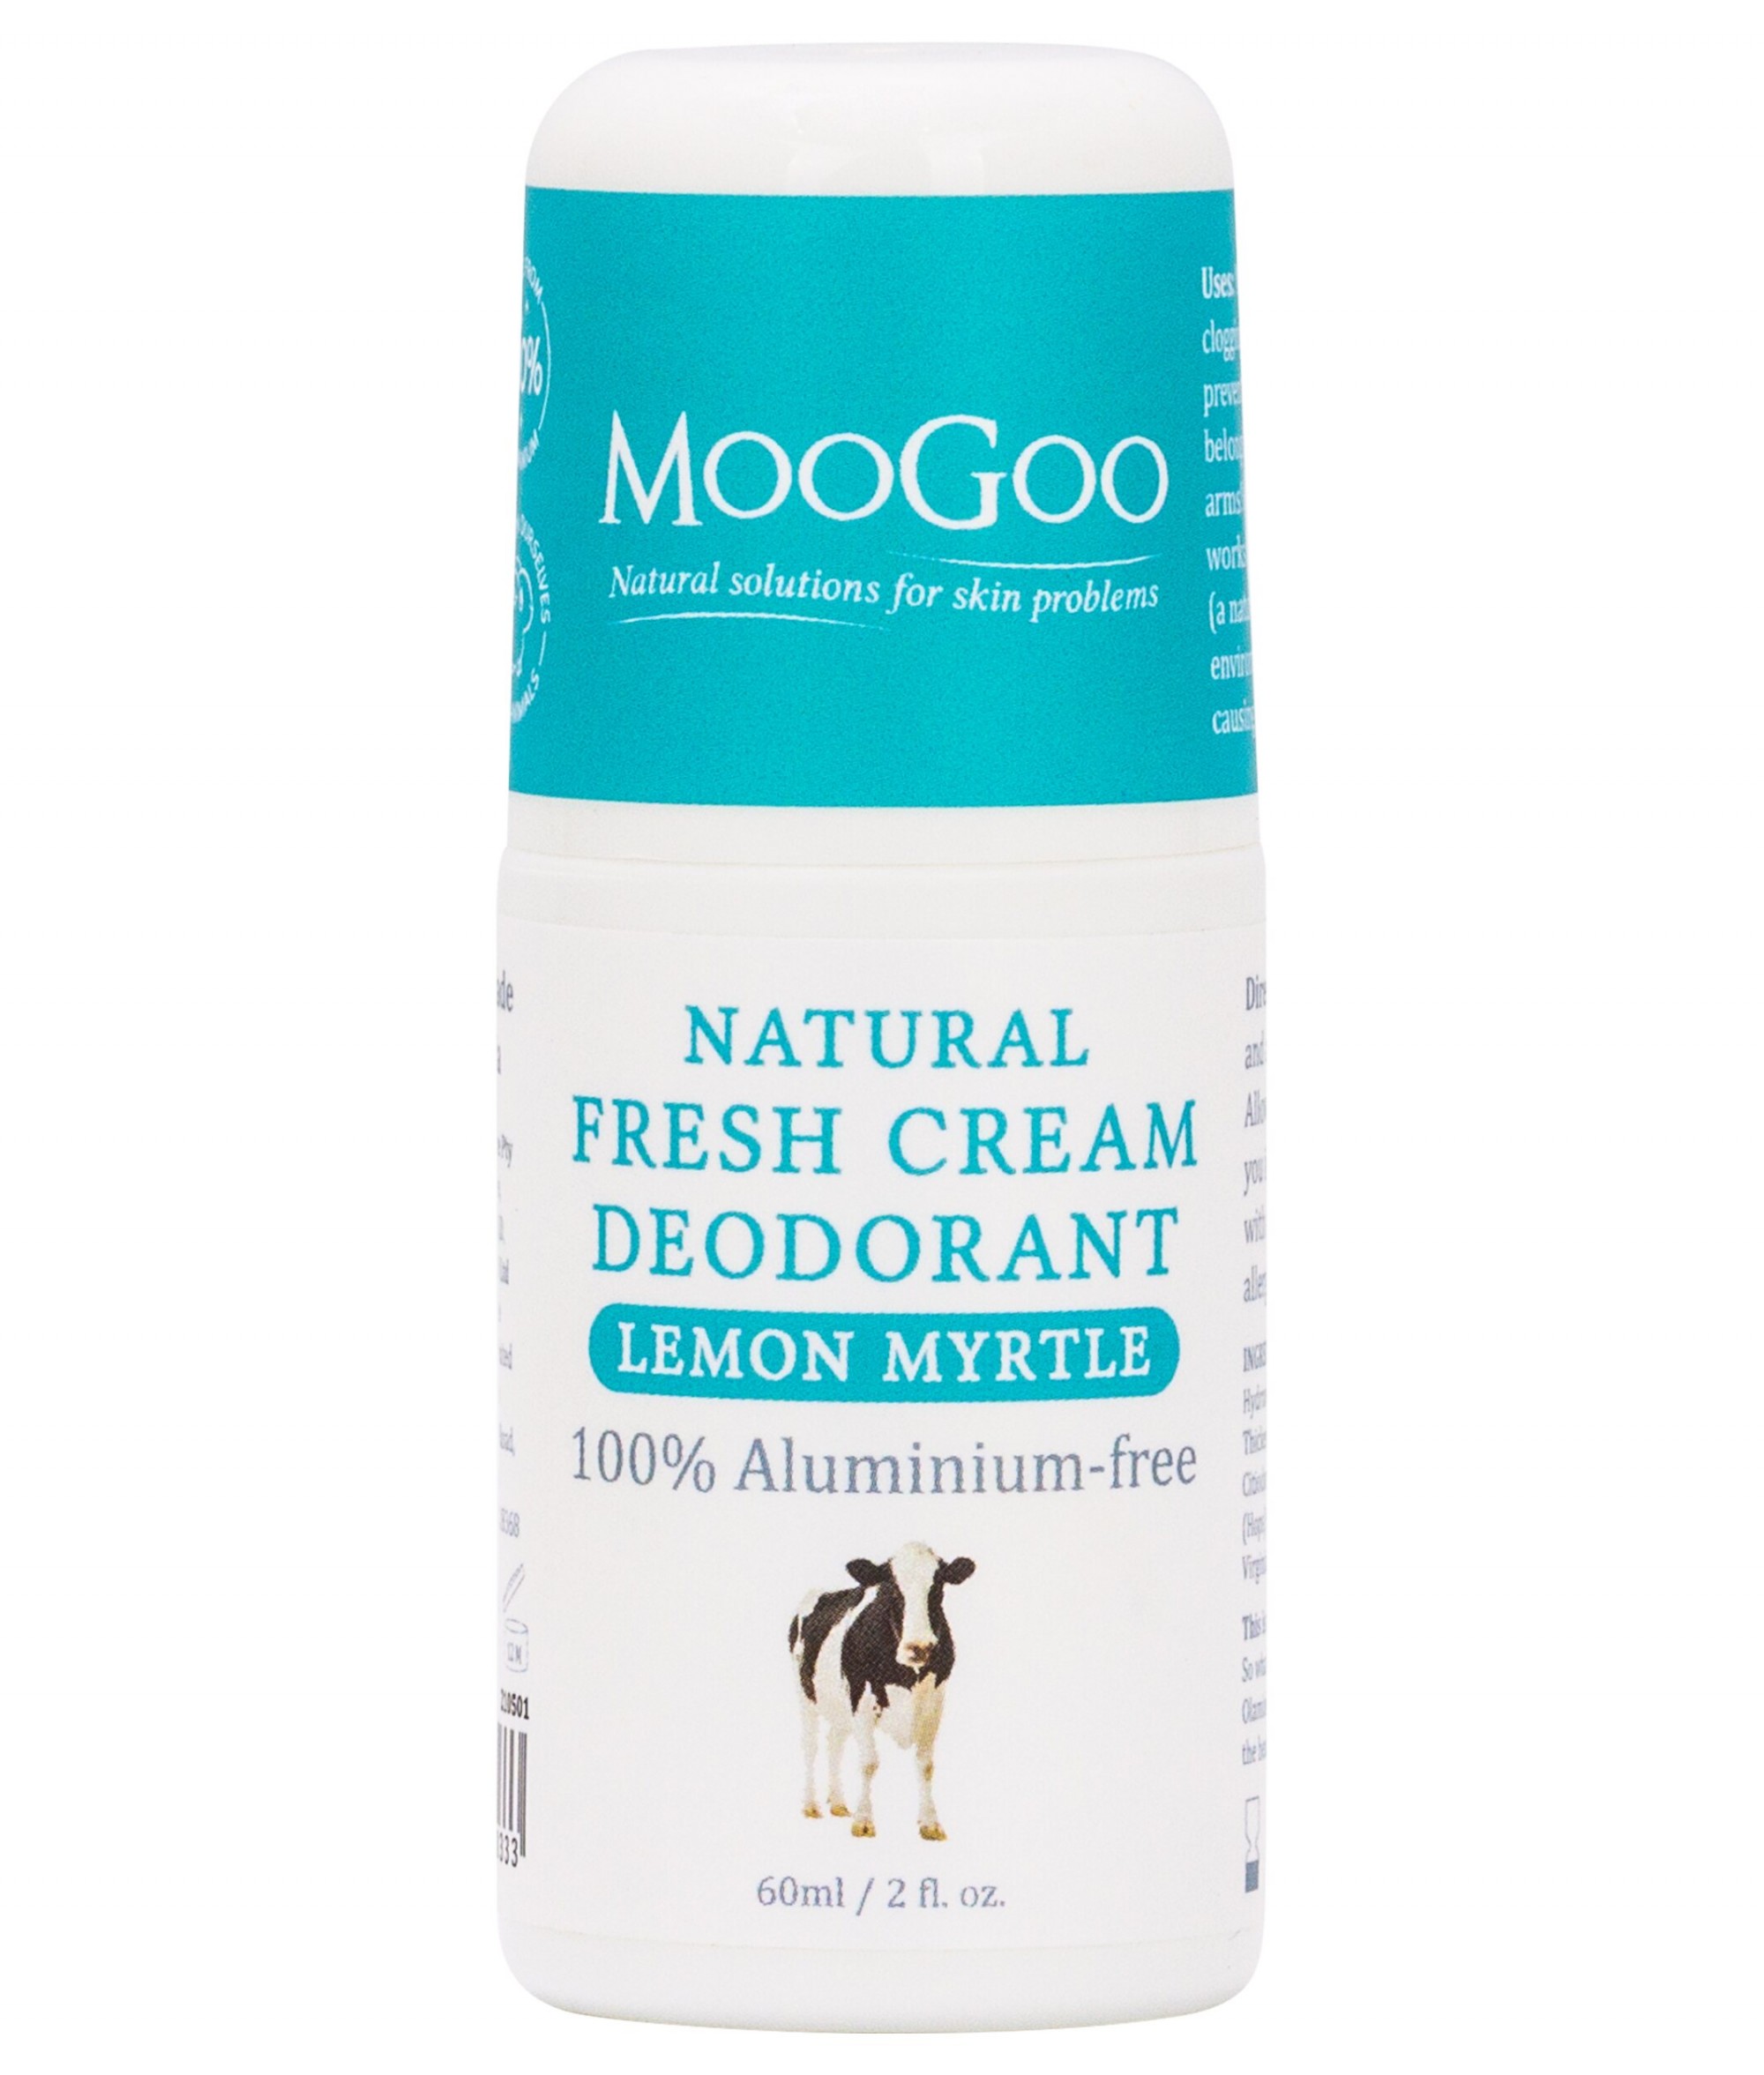 MooGoo Fresh Cream Deodorant - Lemon Myrtle | Cancer Research UK Shop